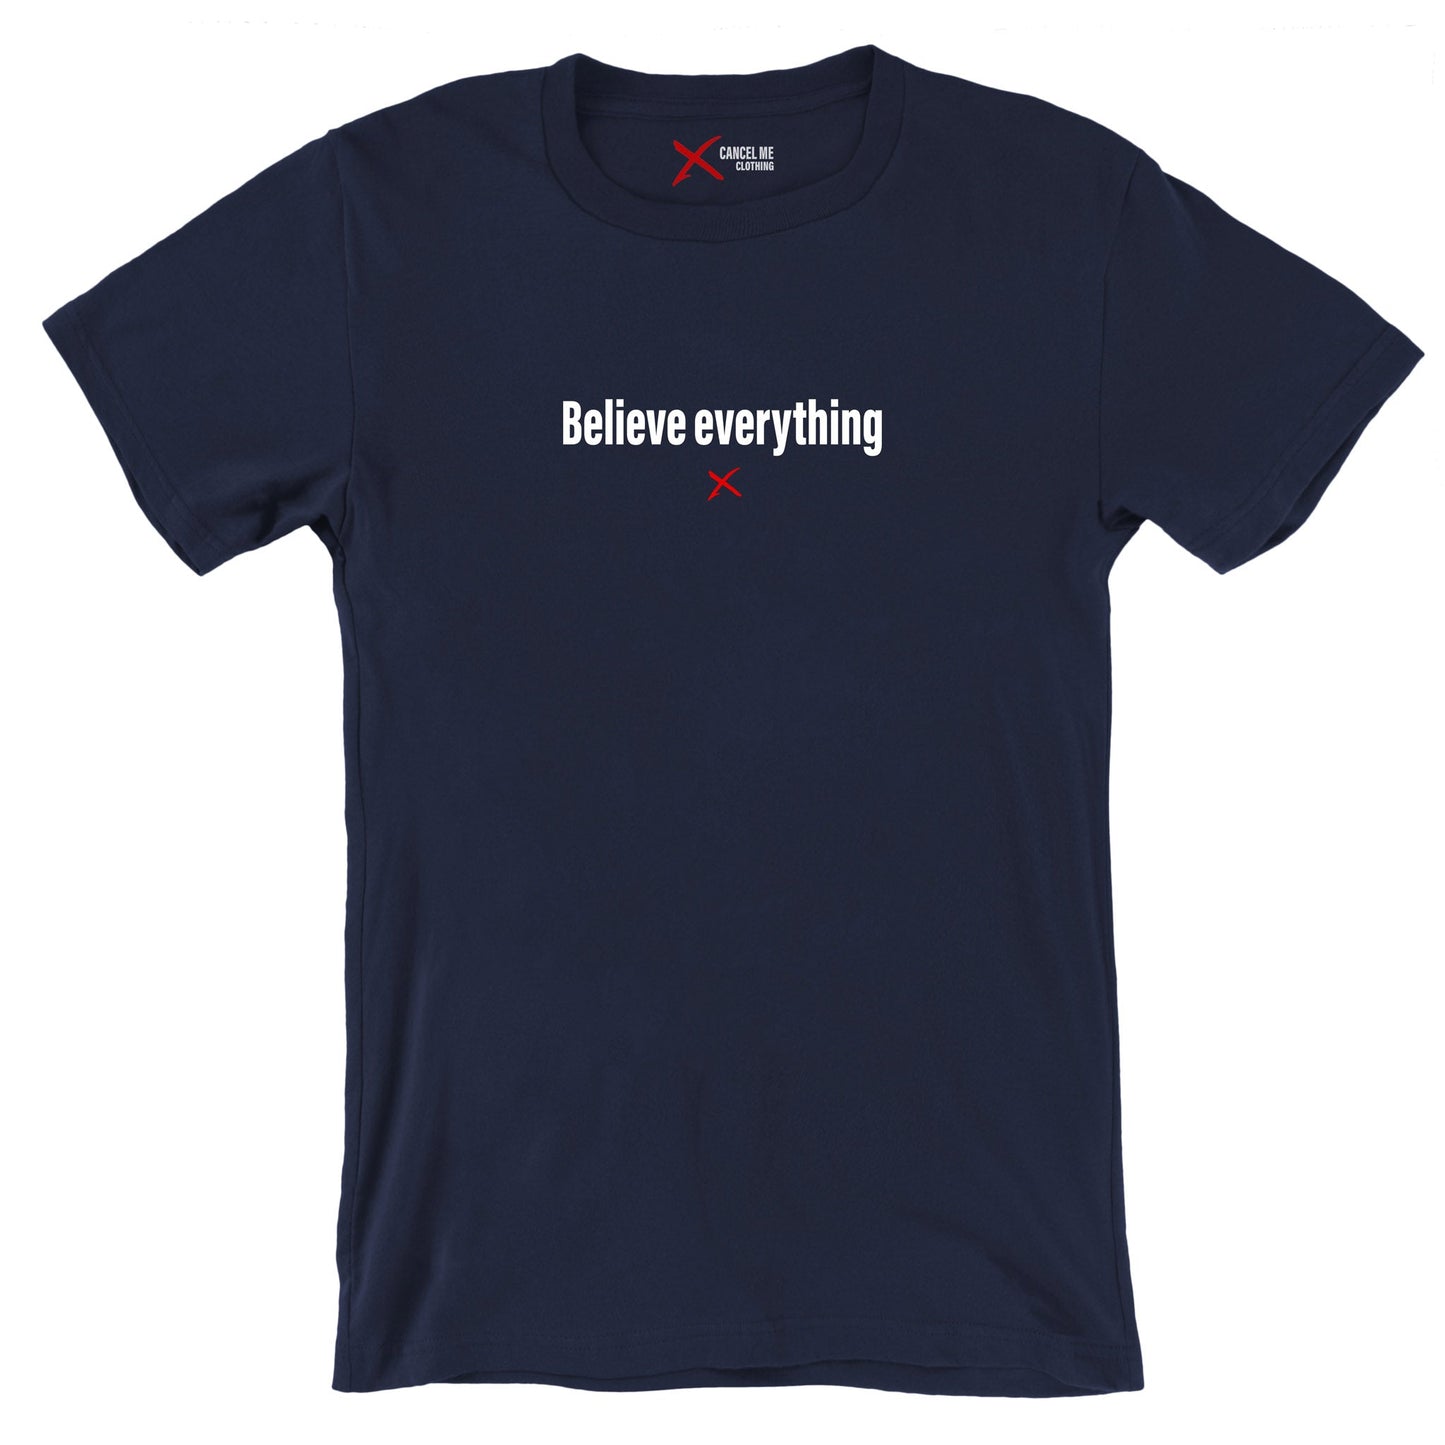 Believe everything - Shirt